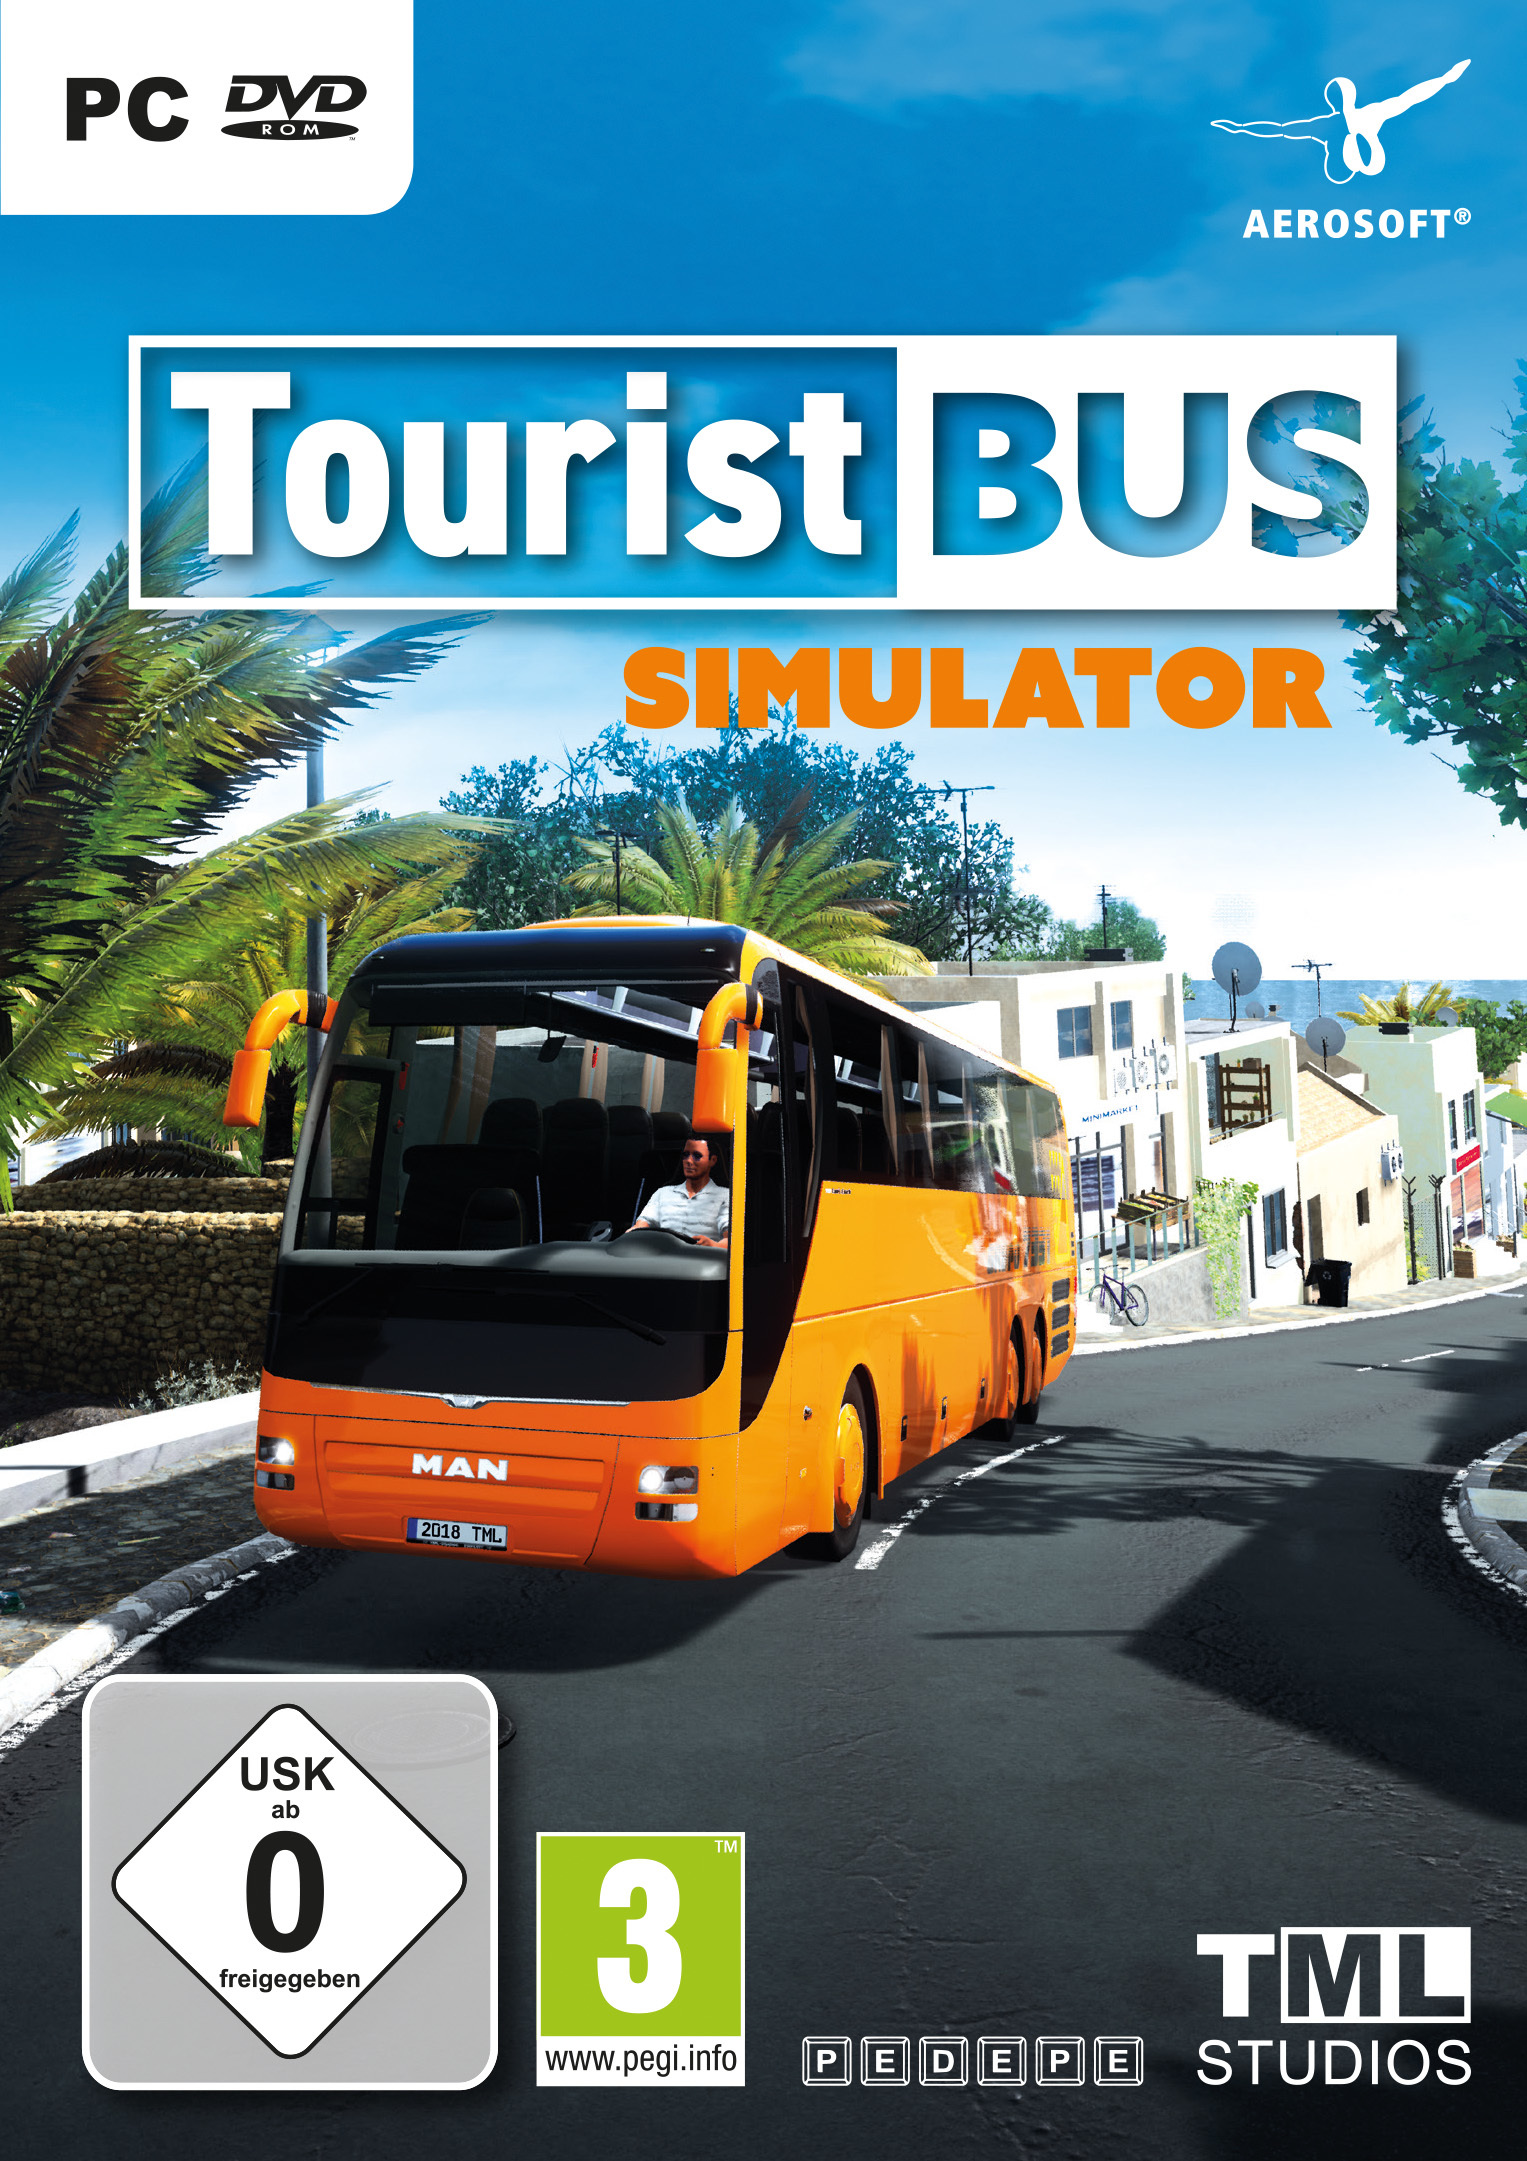 tourist bus simulator save game download